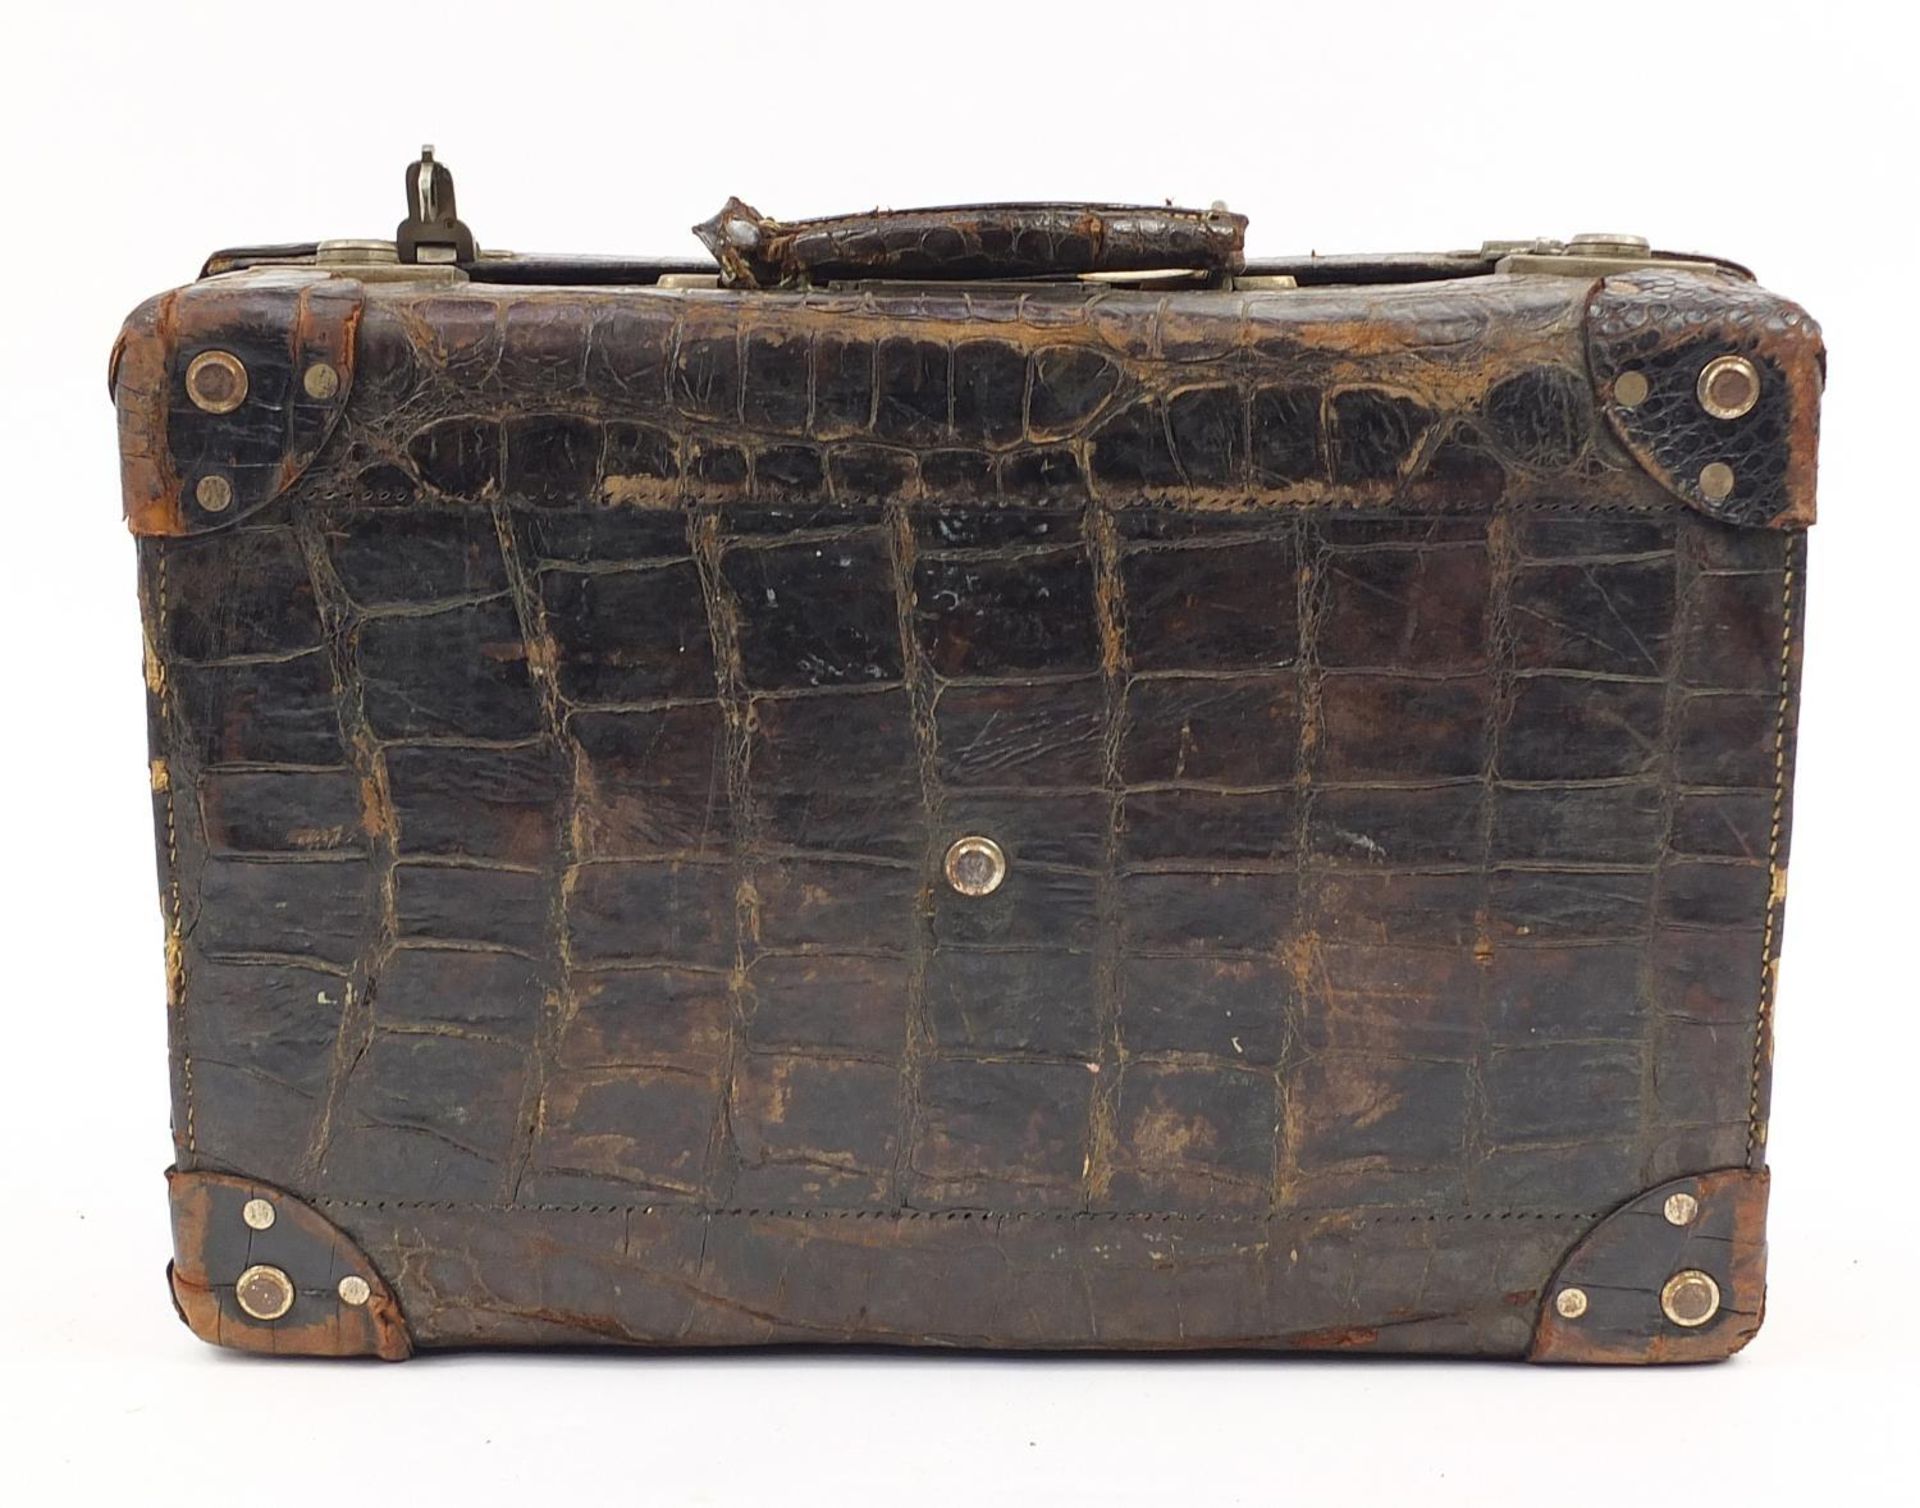 Early 20th century taxidermy interest crocodile skin suitcase, 34.5cm H x 51cm W x 17cm D - Image 5 of 6